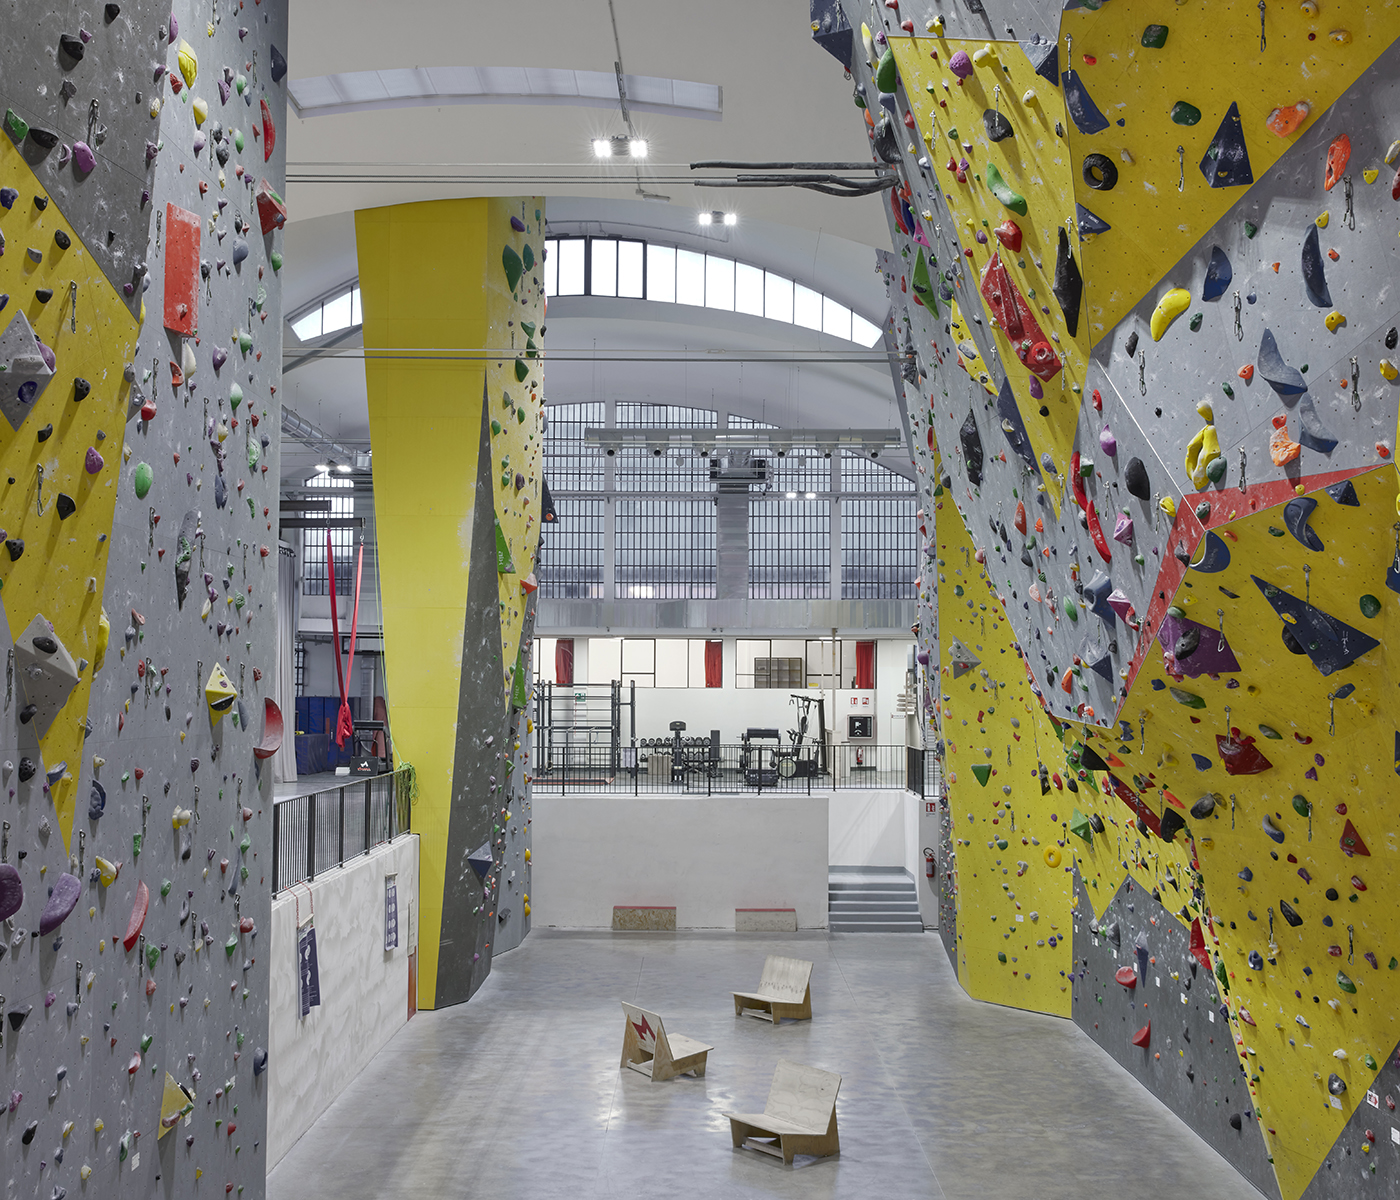 Manga Climbing impianto sportivo indoor